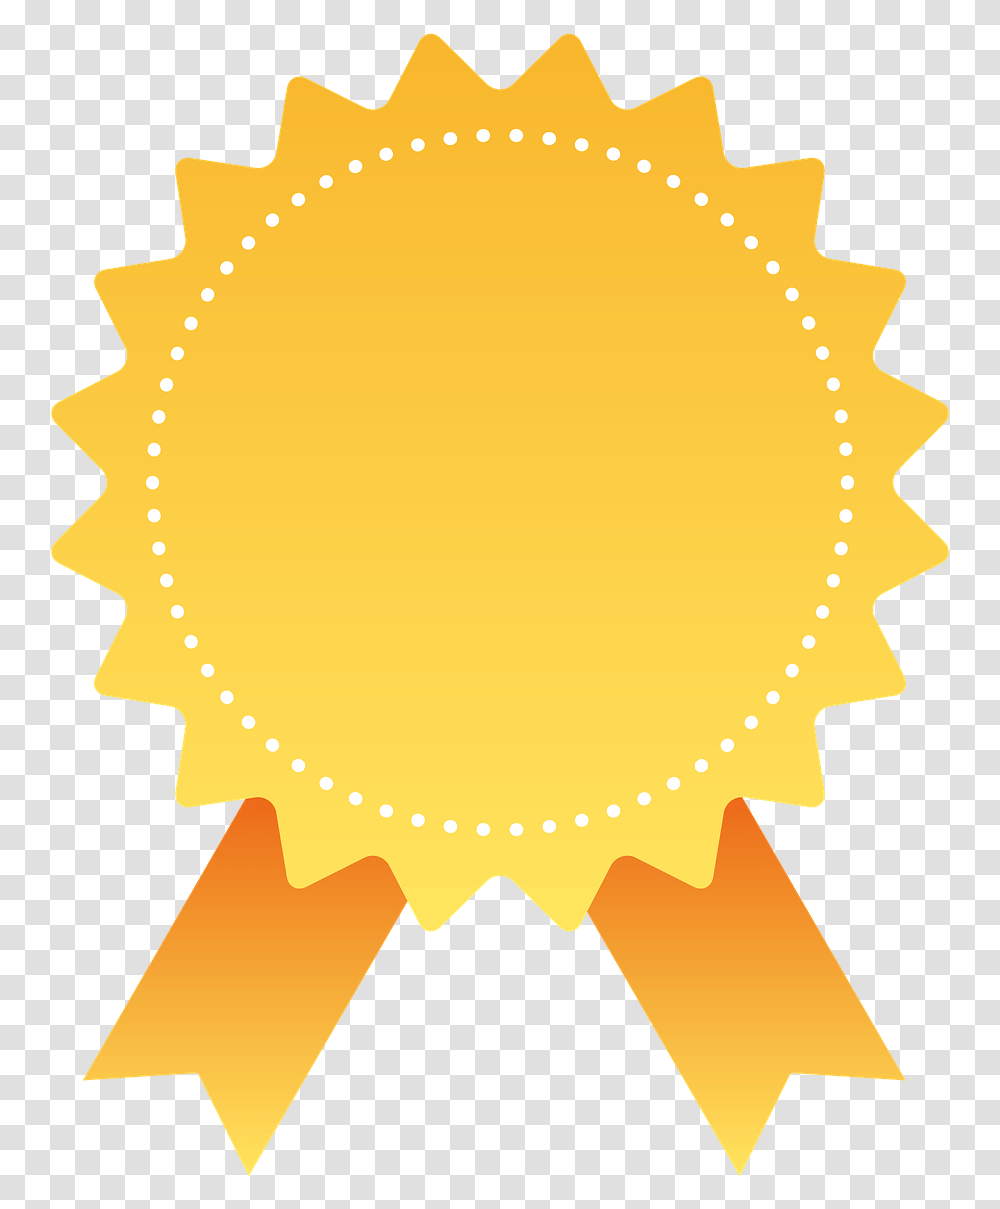 Award Gold Golden Free Image On Pixabay Discount Sticker Vector, Outdoors, Nature, Gold Medal, Trophy Transparent Png